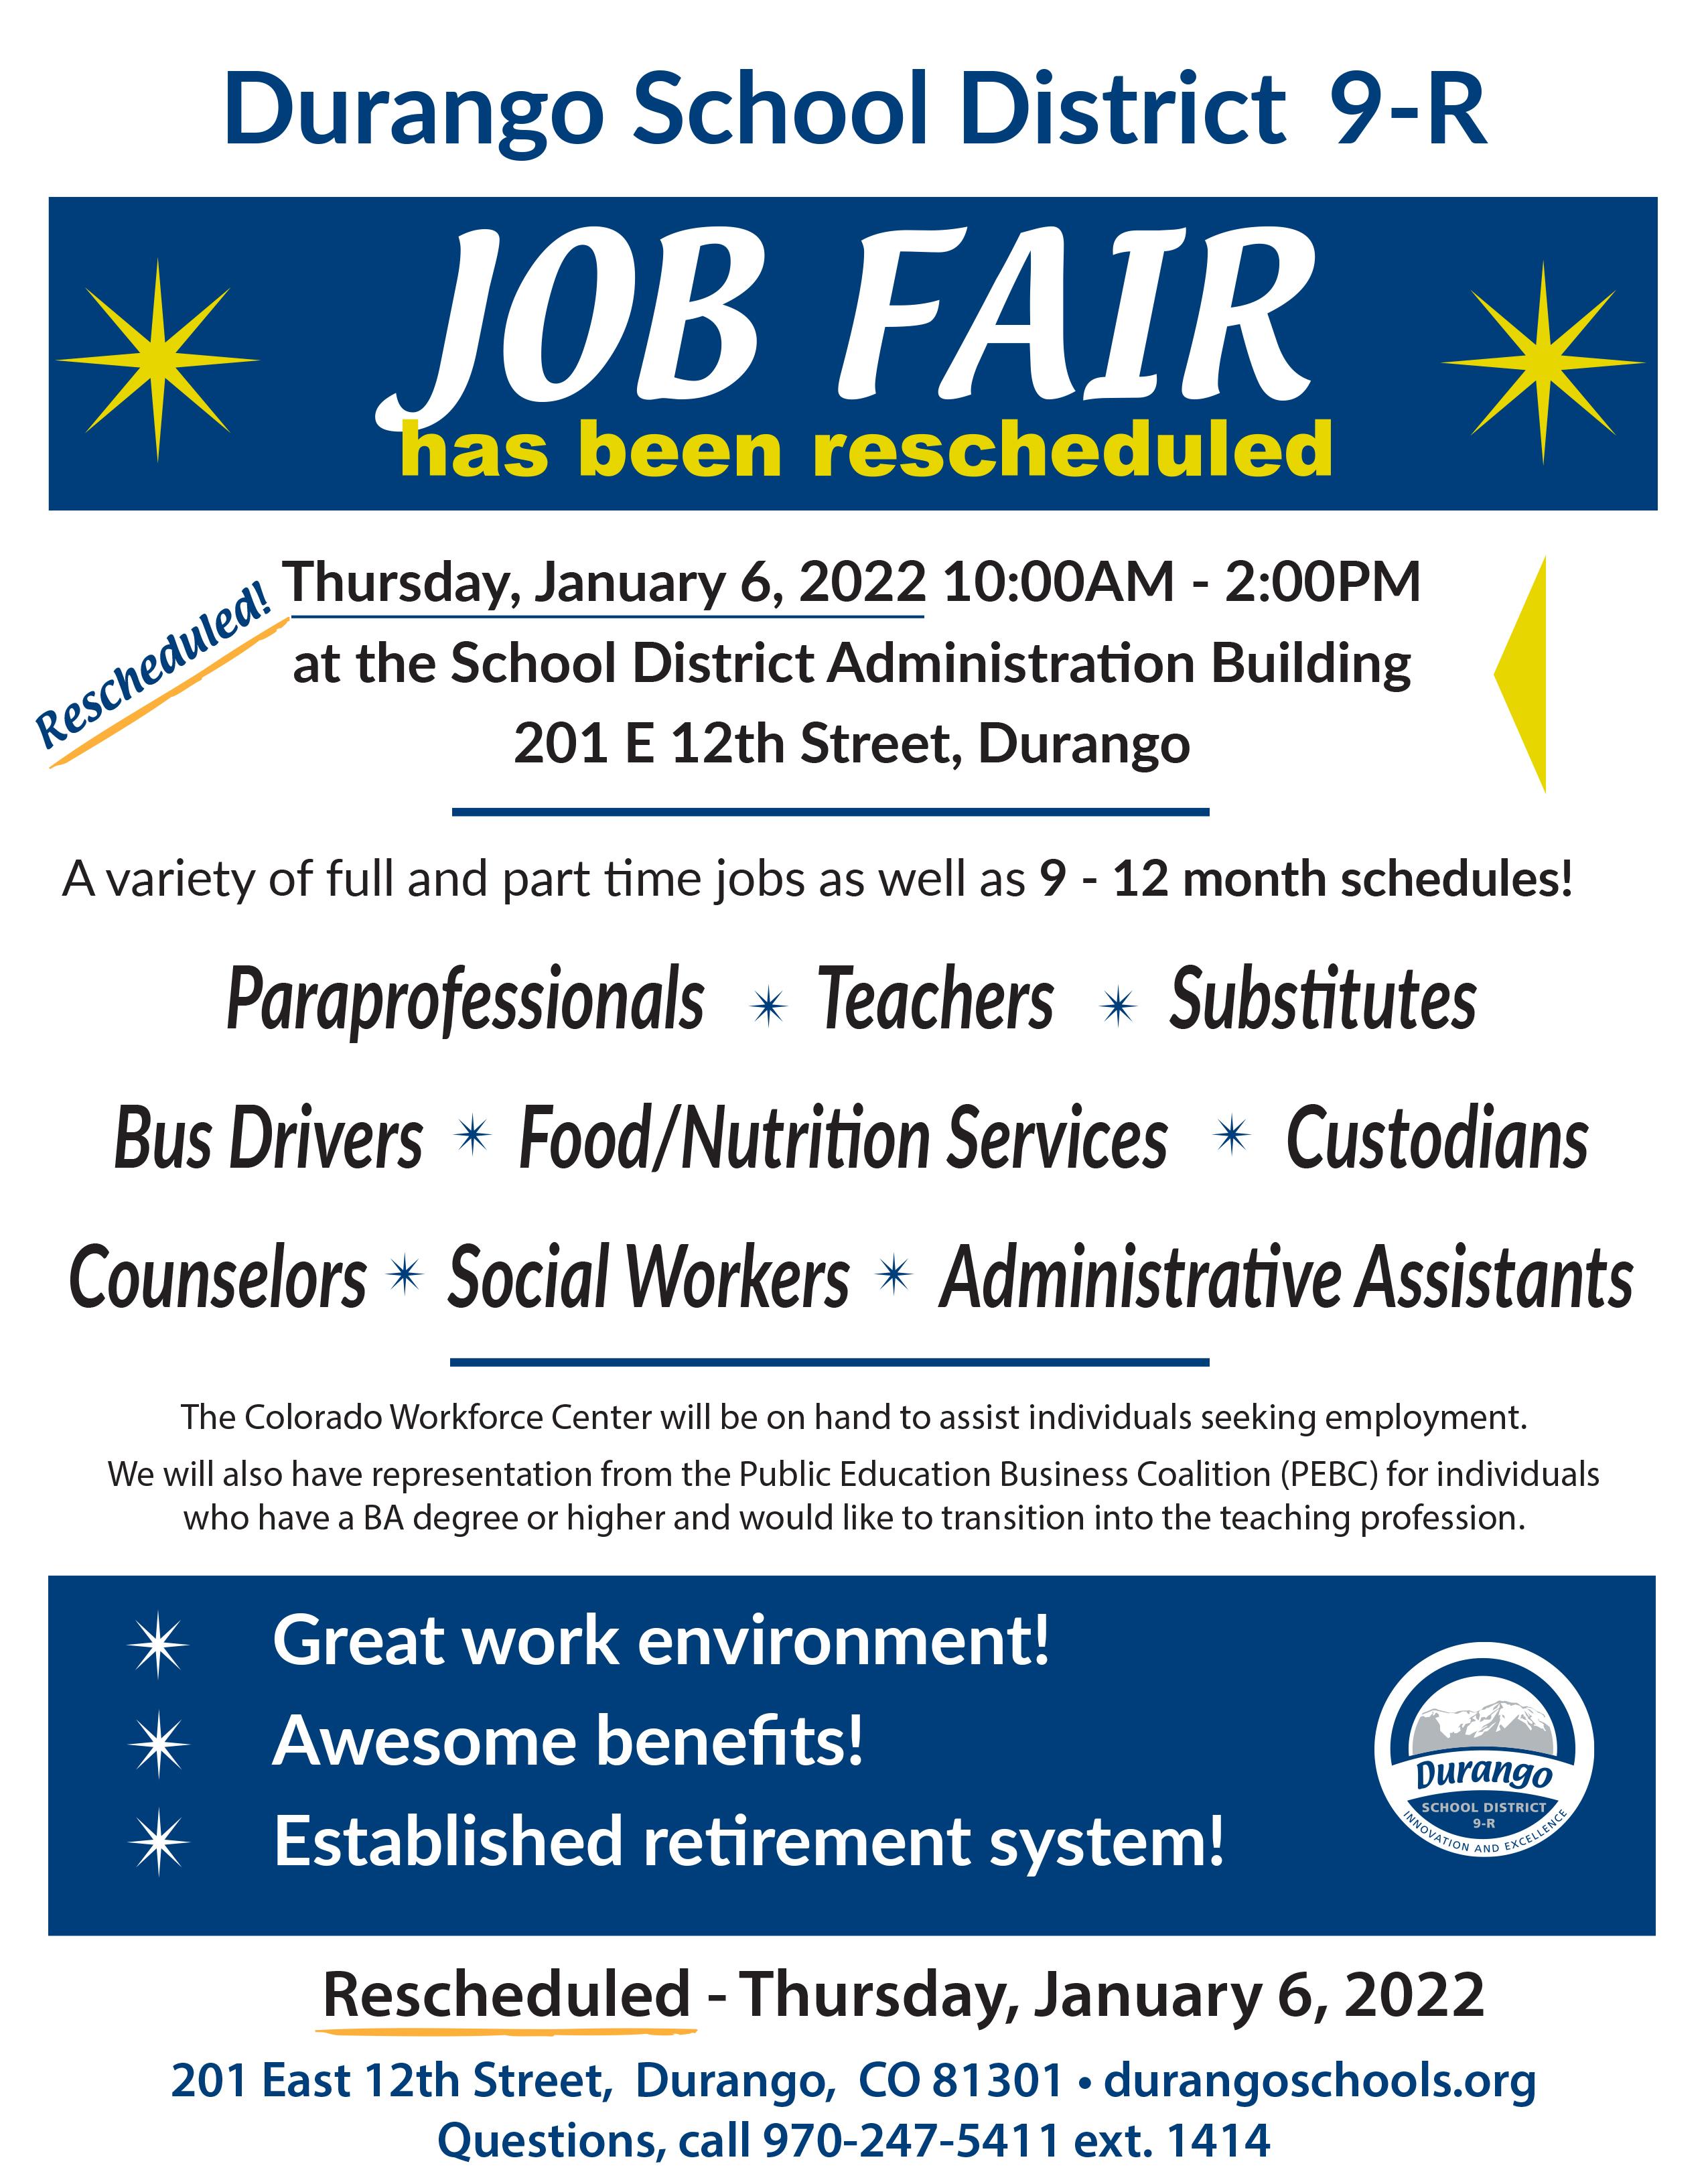 Job Fair poster